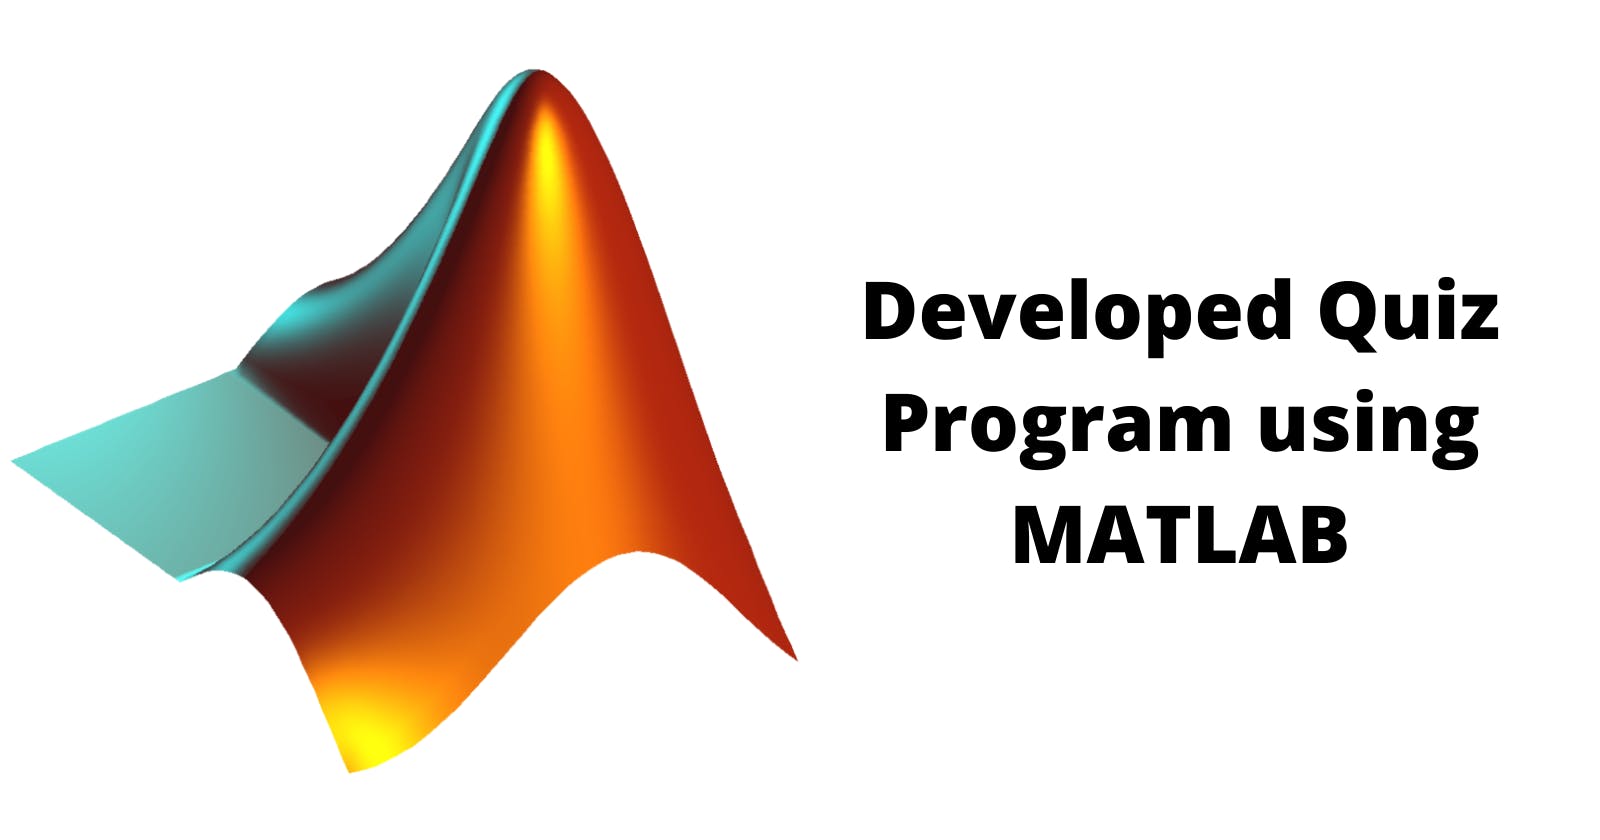 Developed a Quiz Program using MATLAB